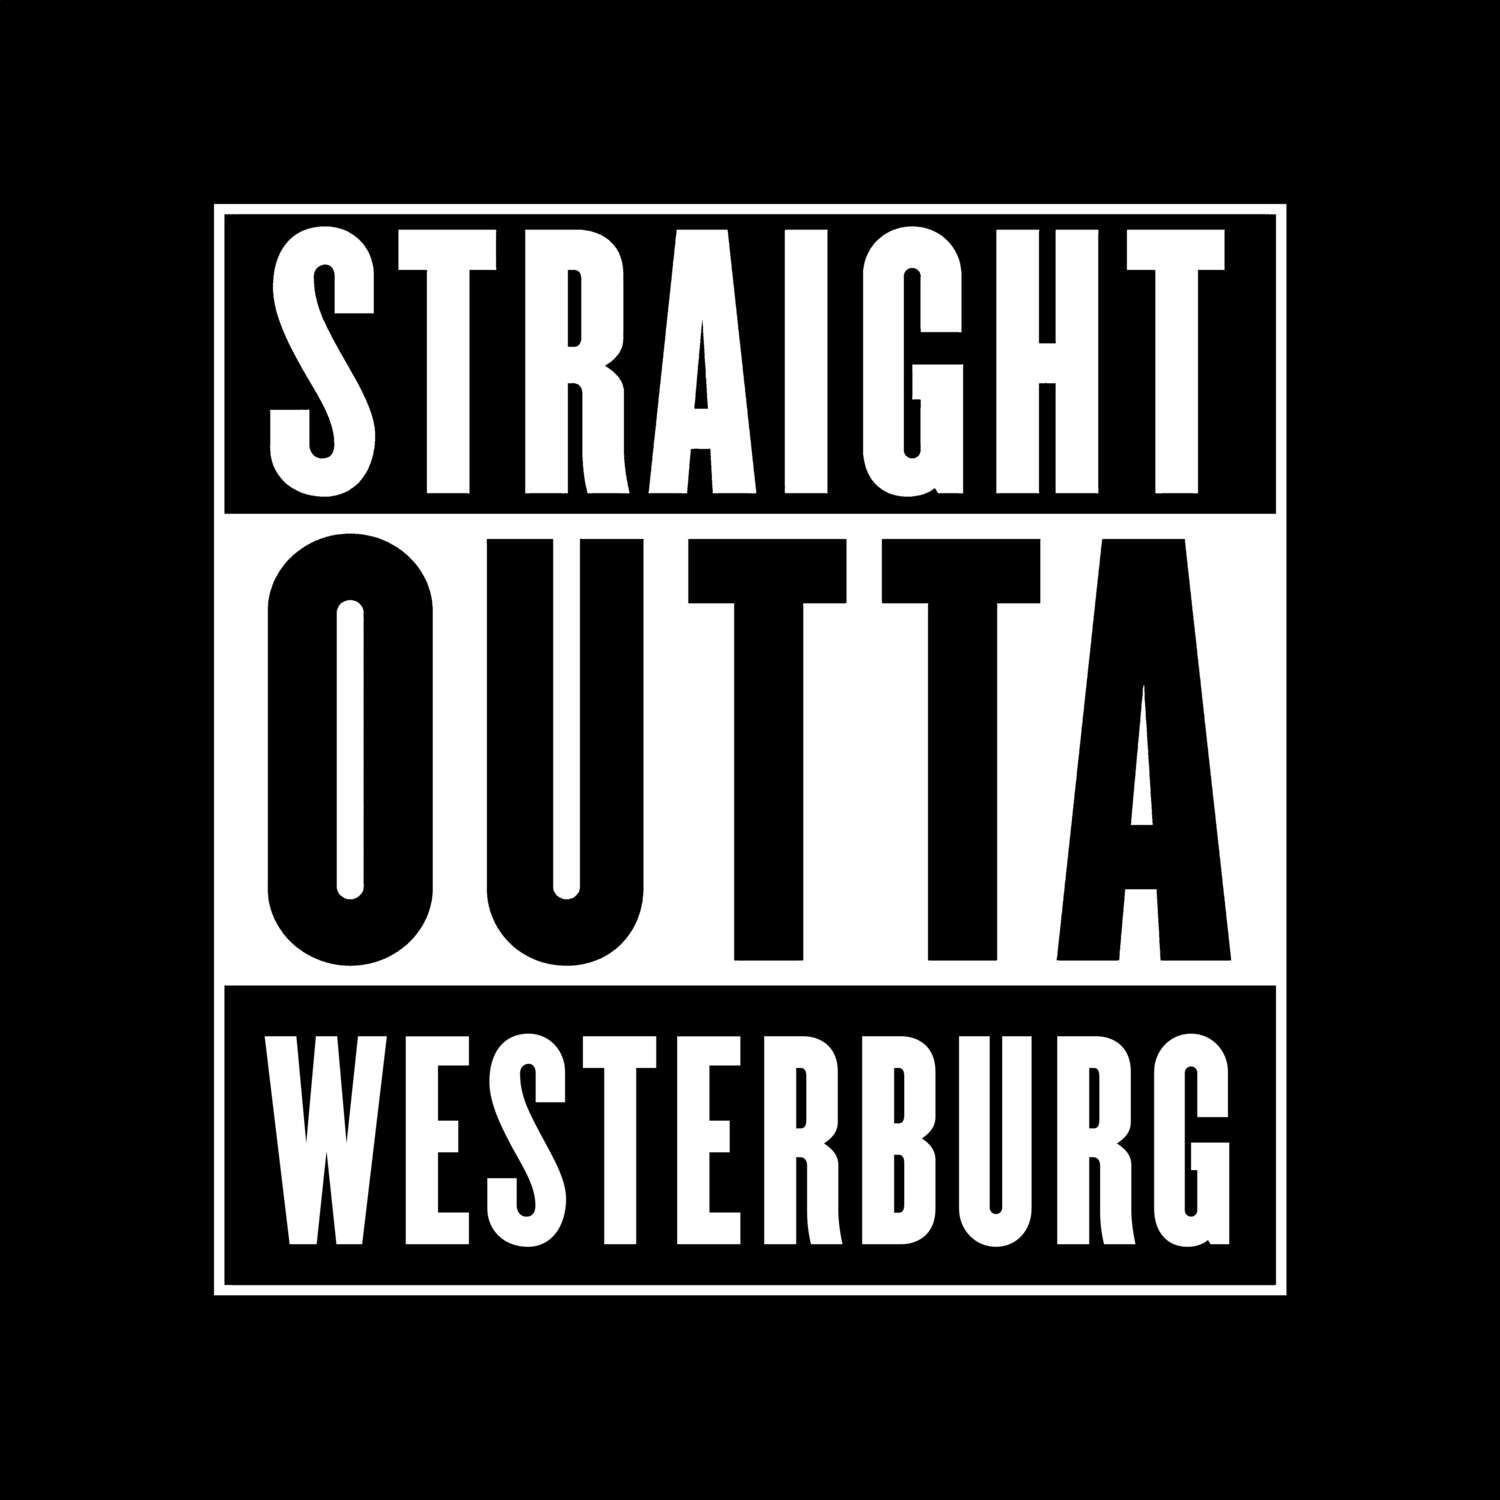 Westerburg T-Shirt »Straight Outta«